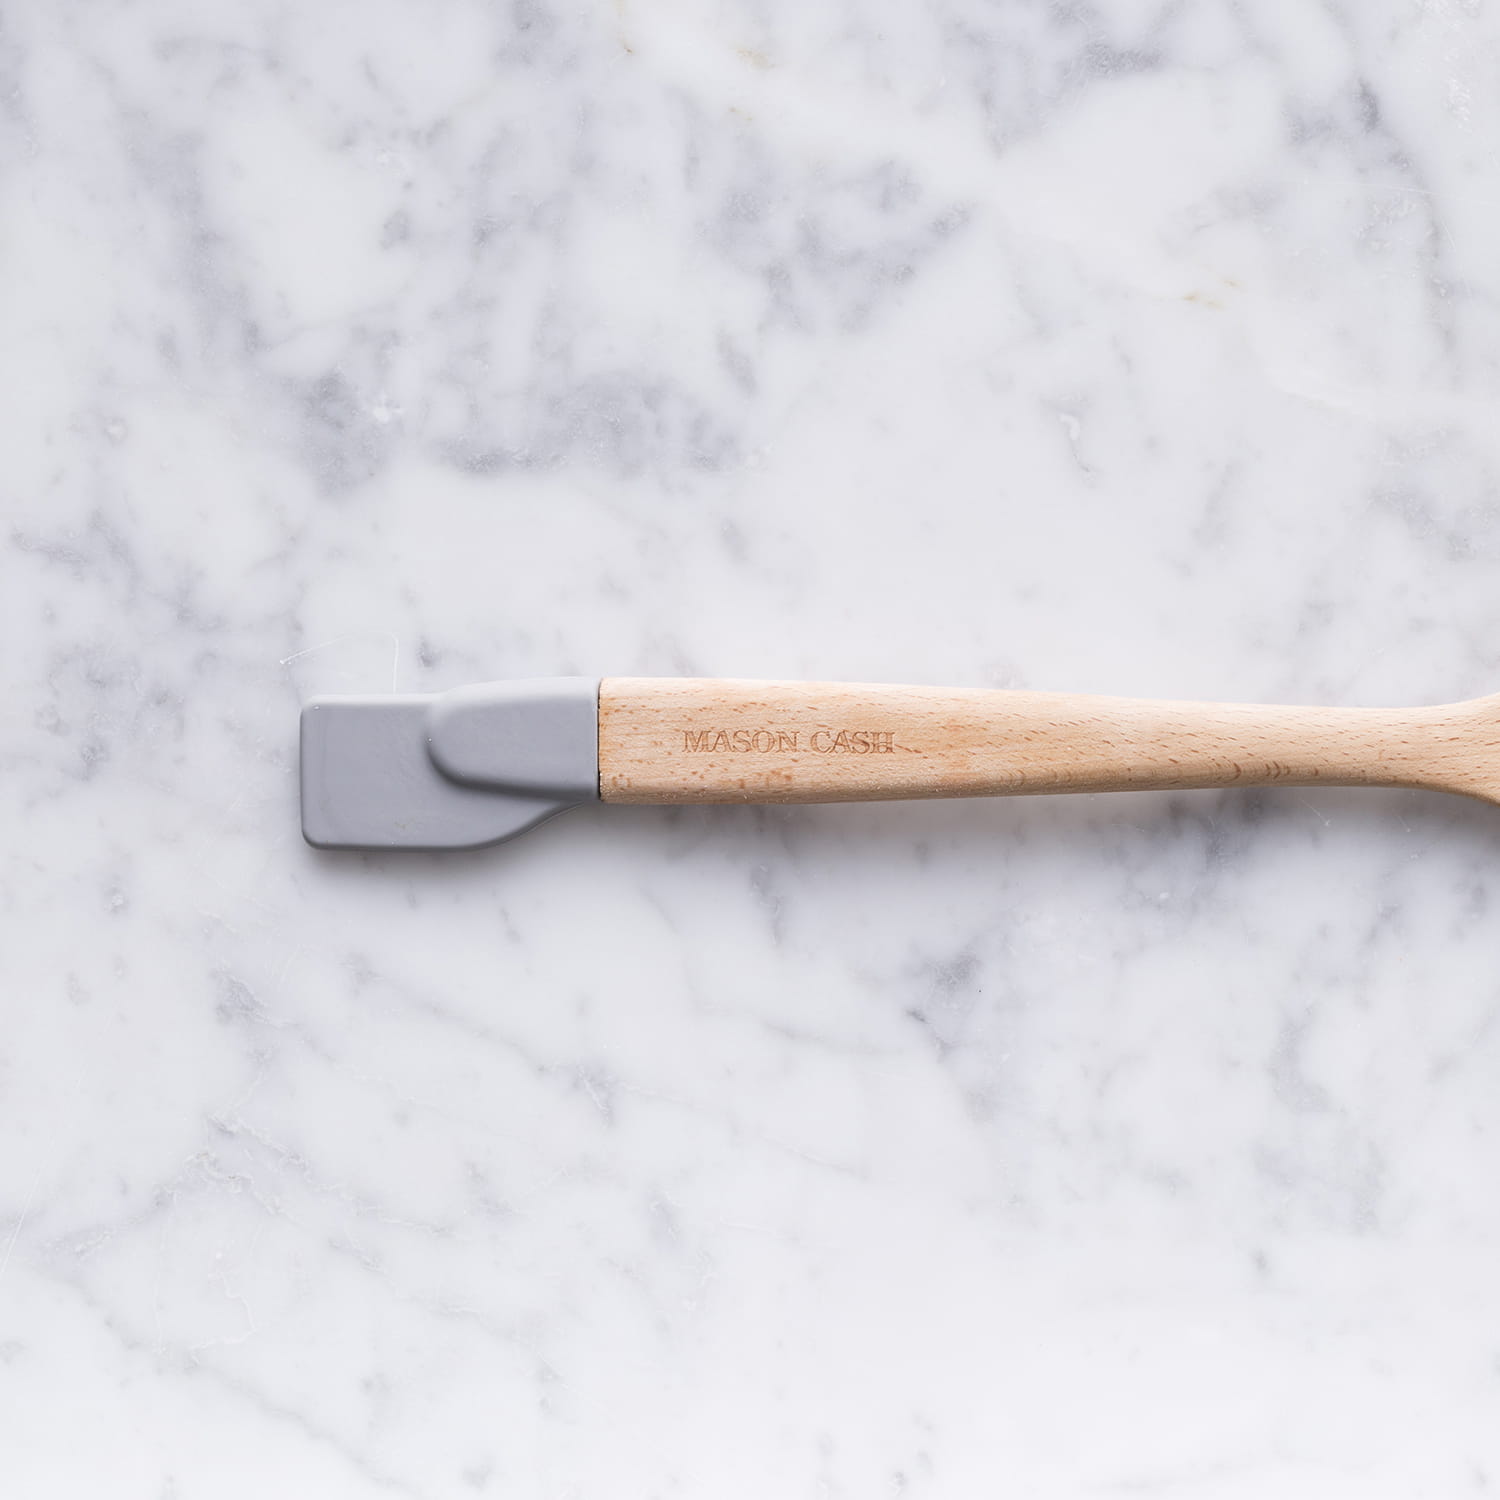 Mason Cash Innovative Küche - 3-IN-1 Kochlöffel mit Silikonspatel